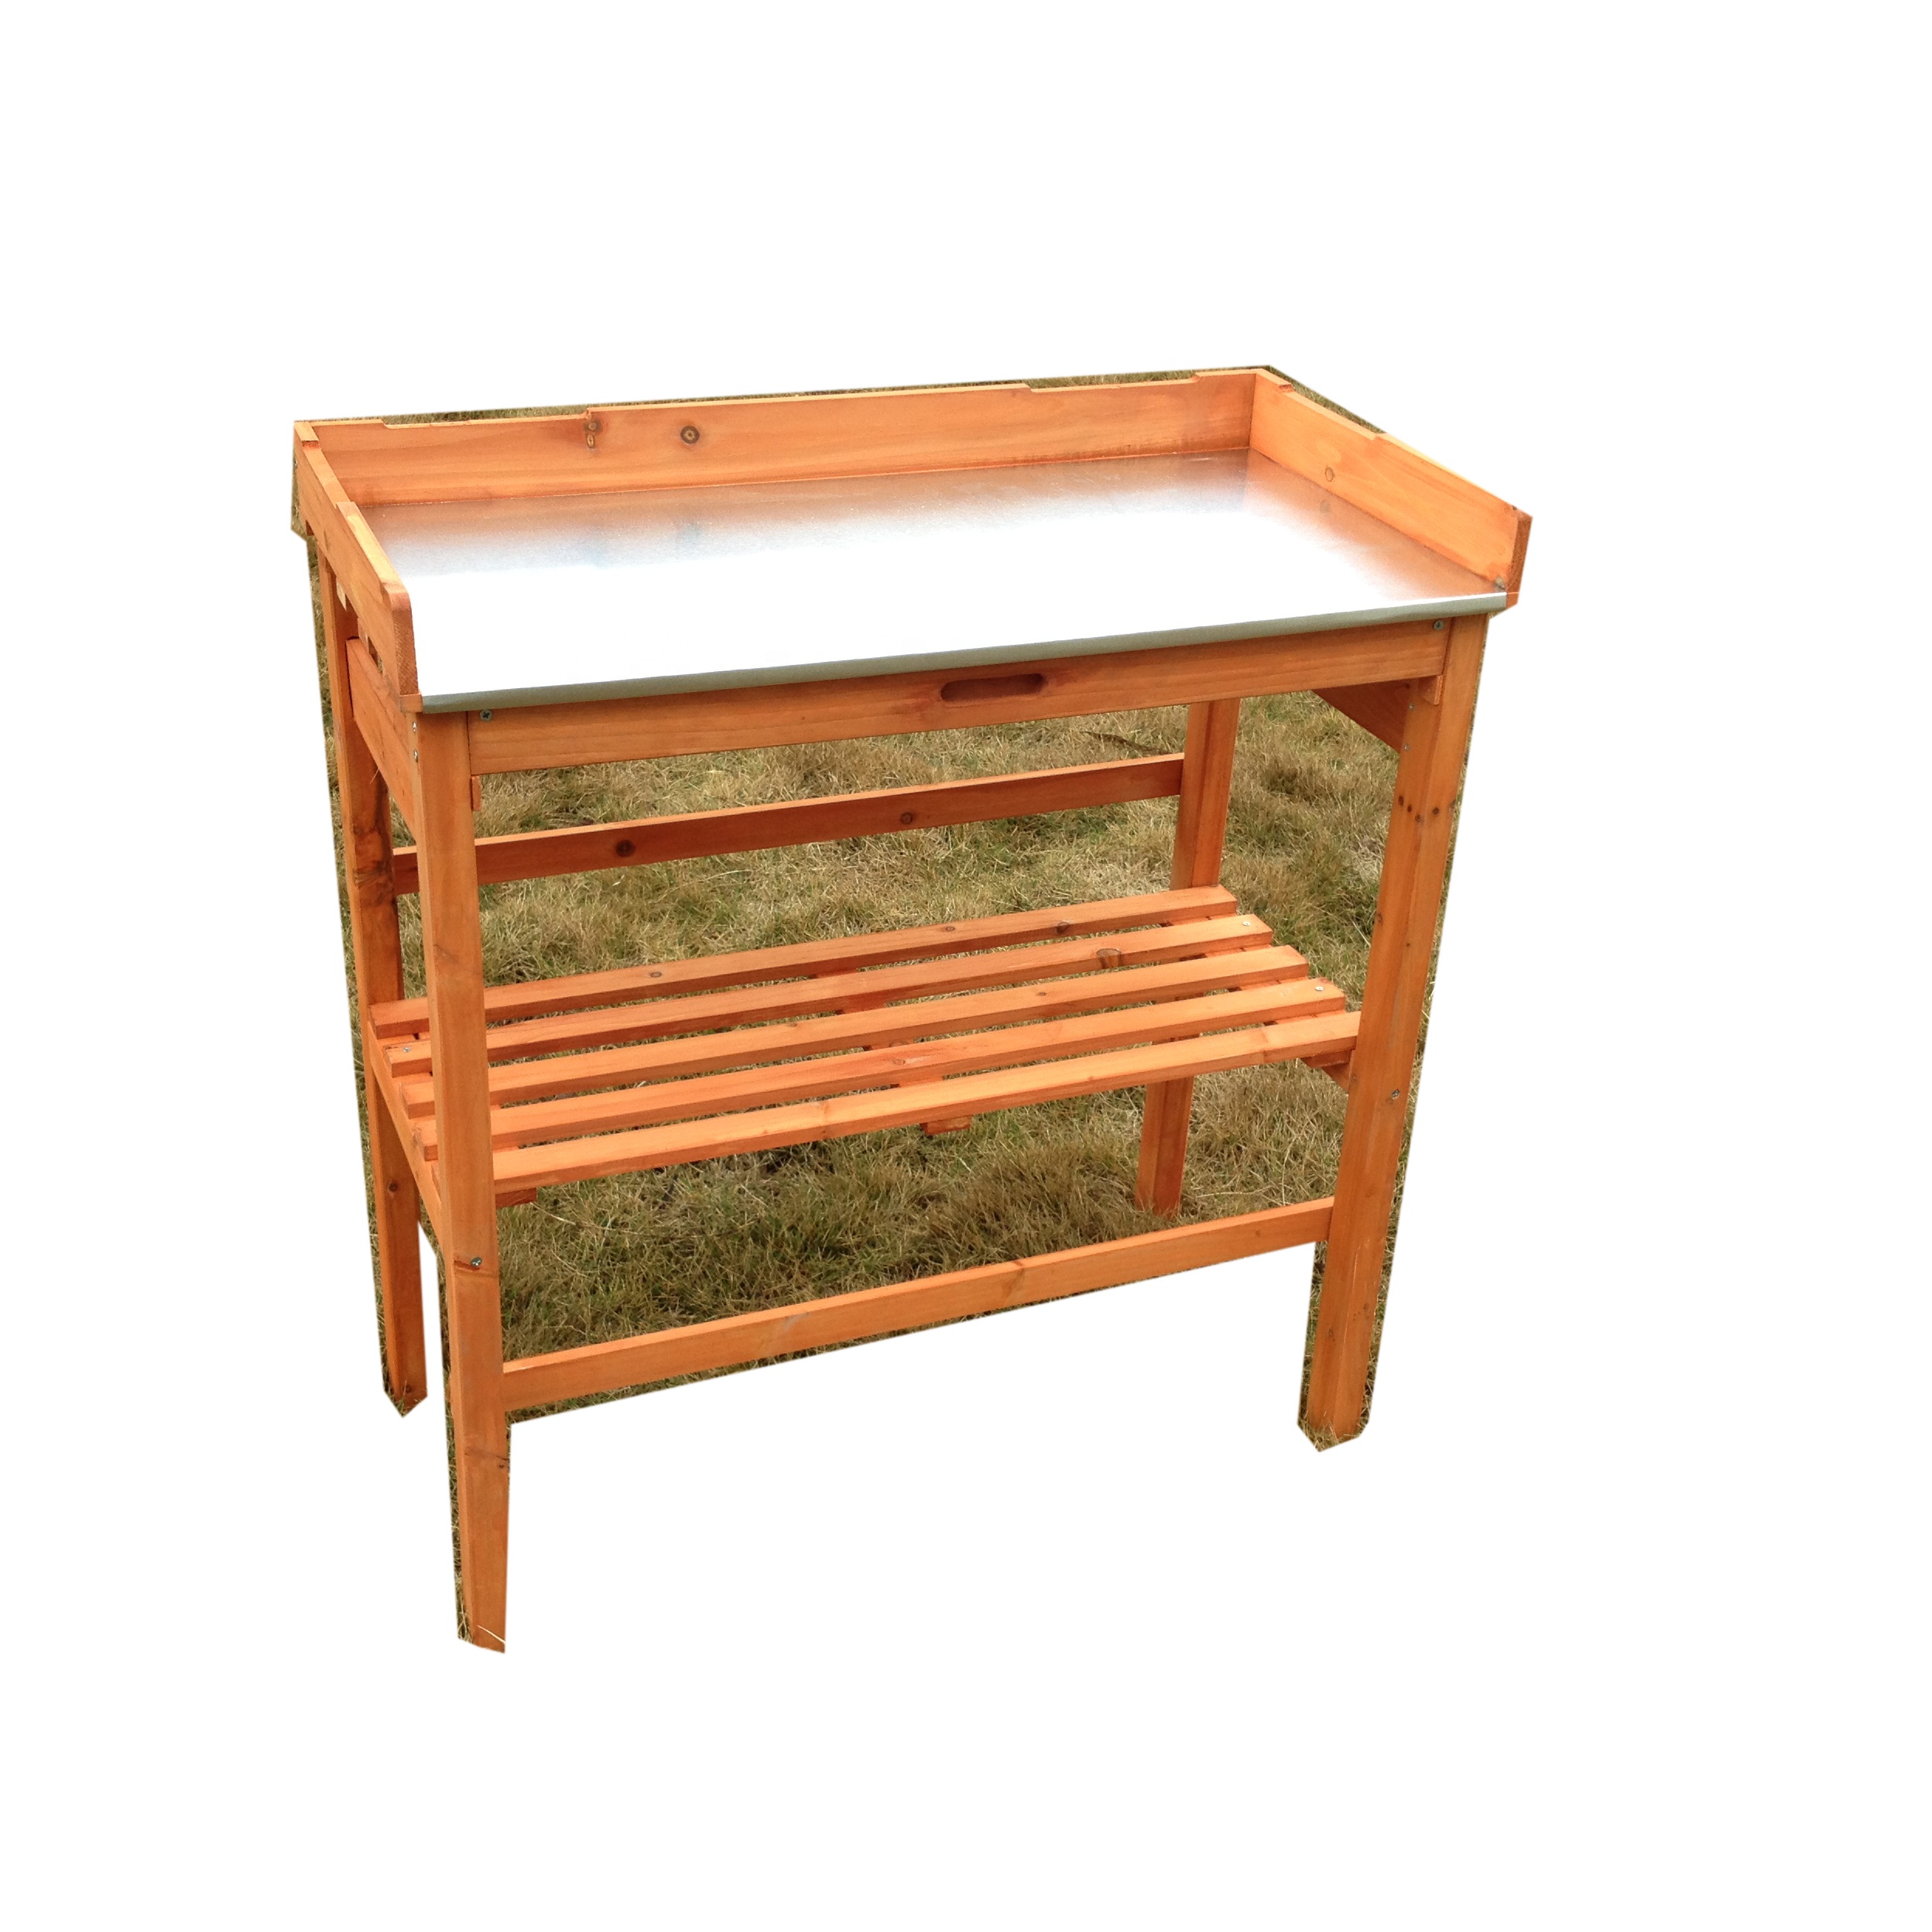 Wood Workbench Shelf Outdoor Storage Planting Table Potting Bench Garden w/Sink with Ebook